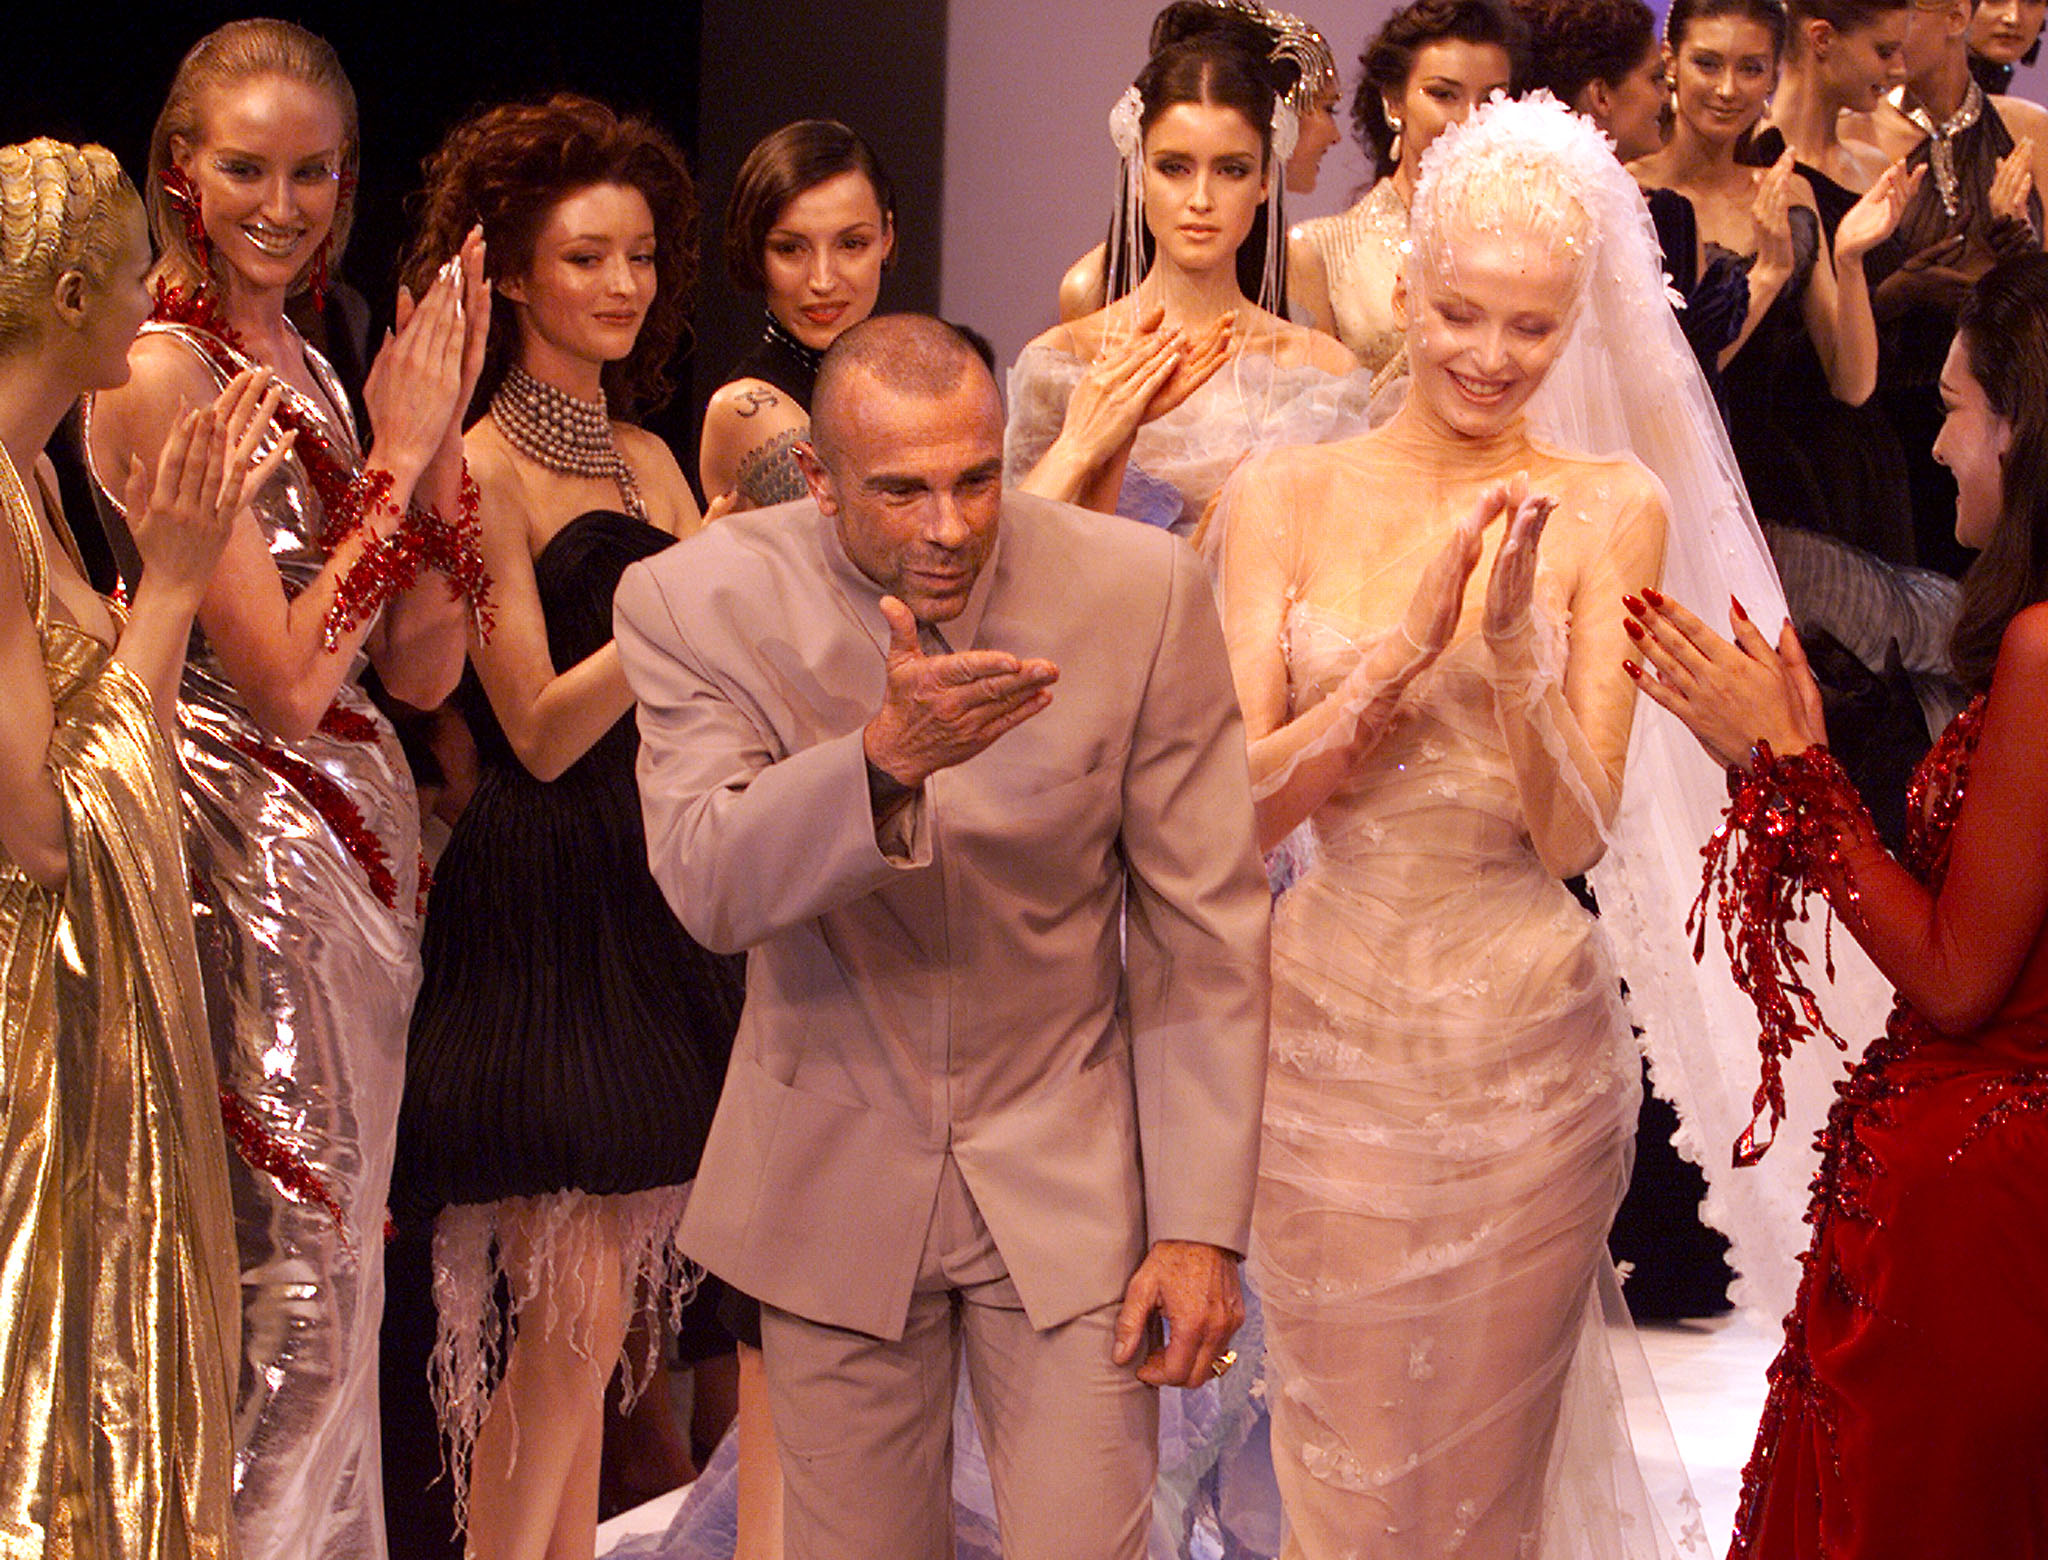 Iconic Fashion Designer Thierry Mugler Dies at 73